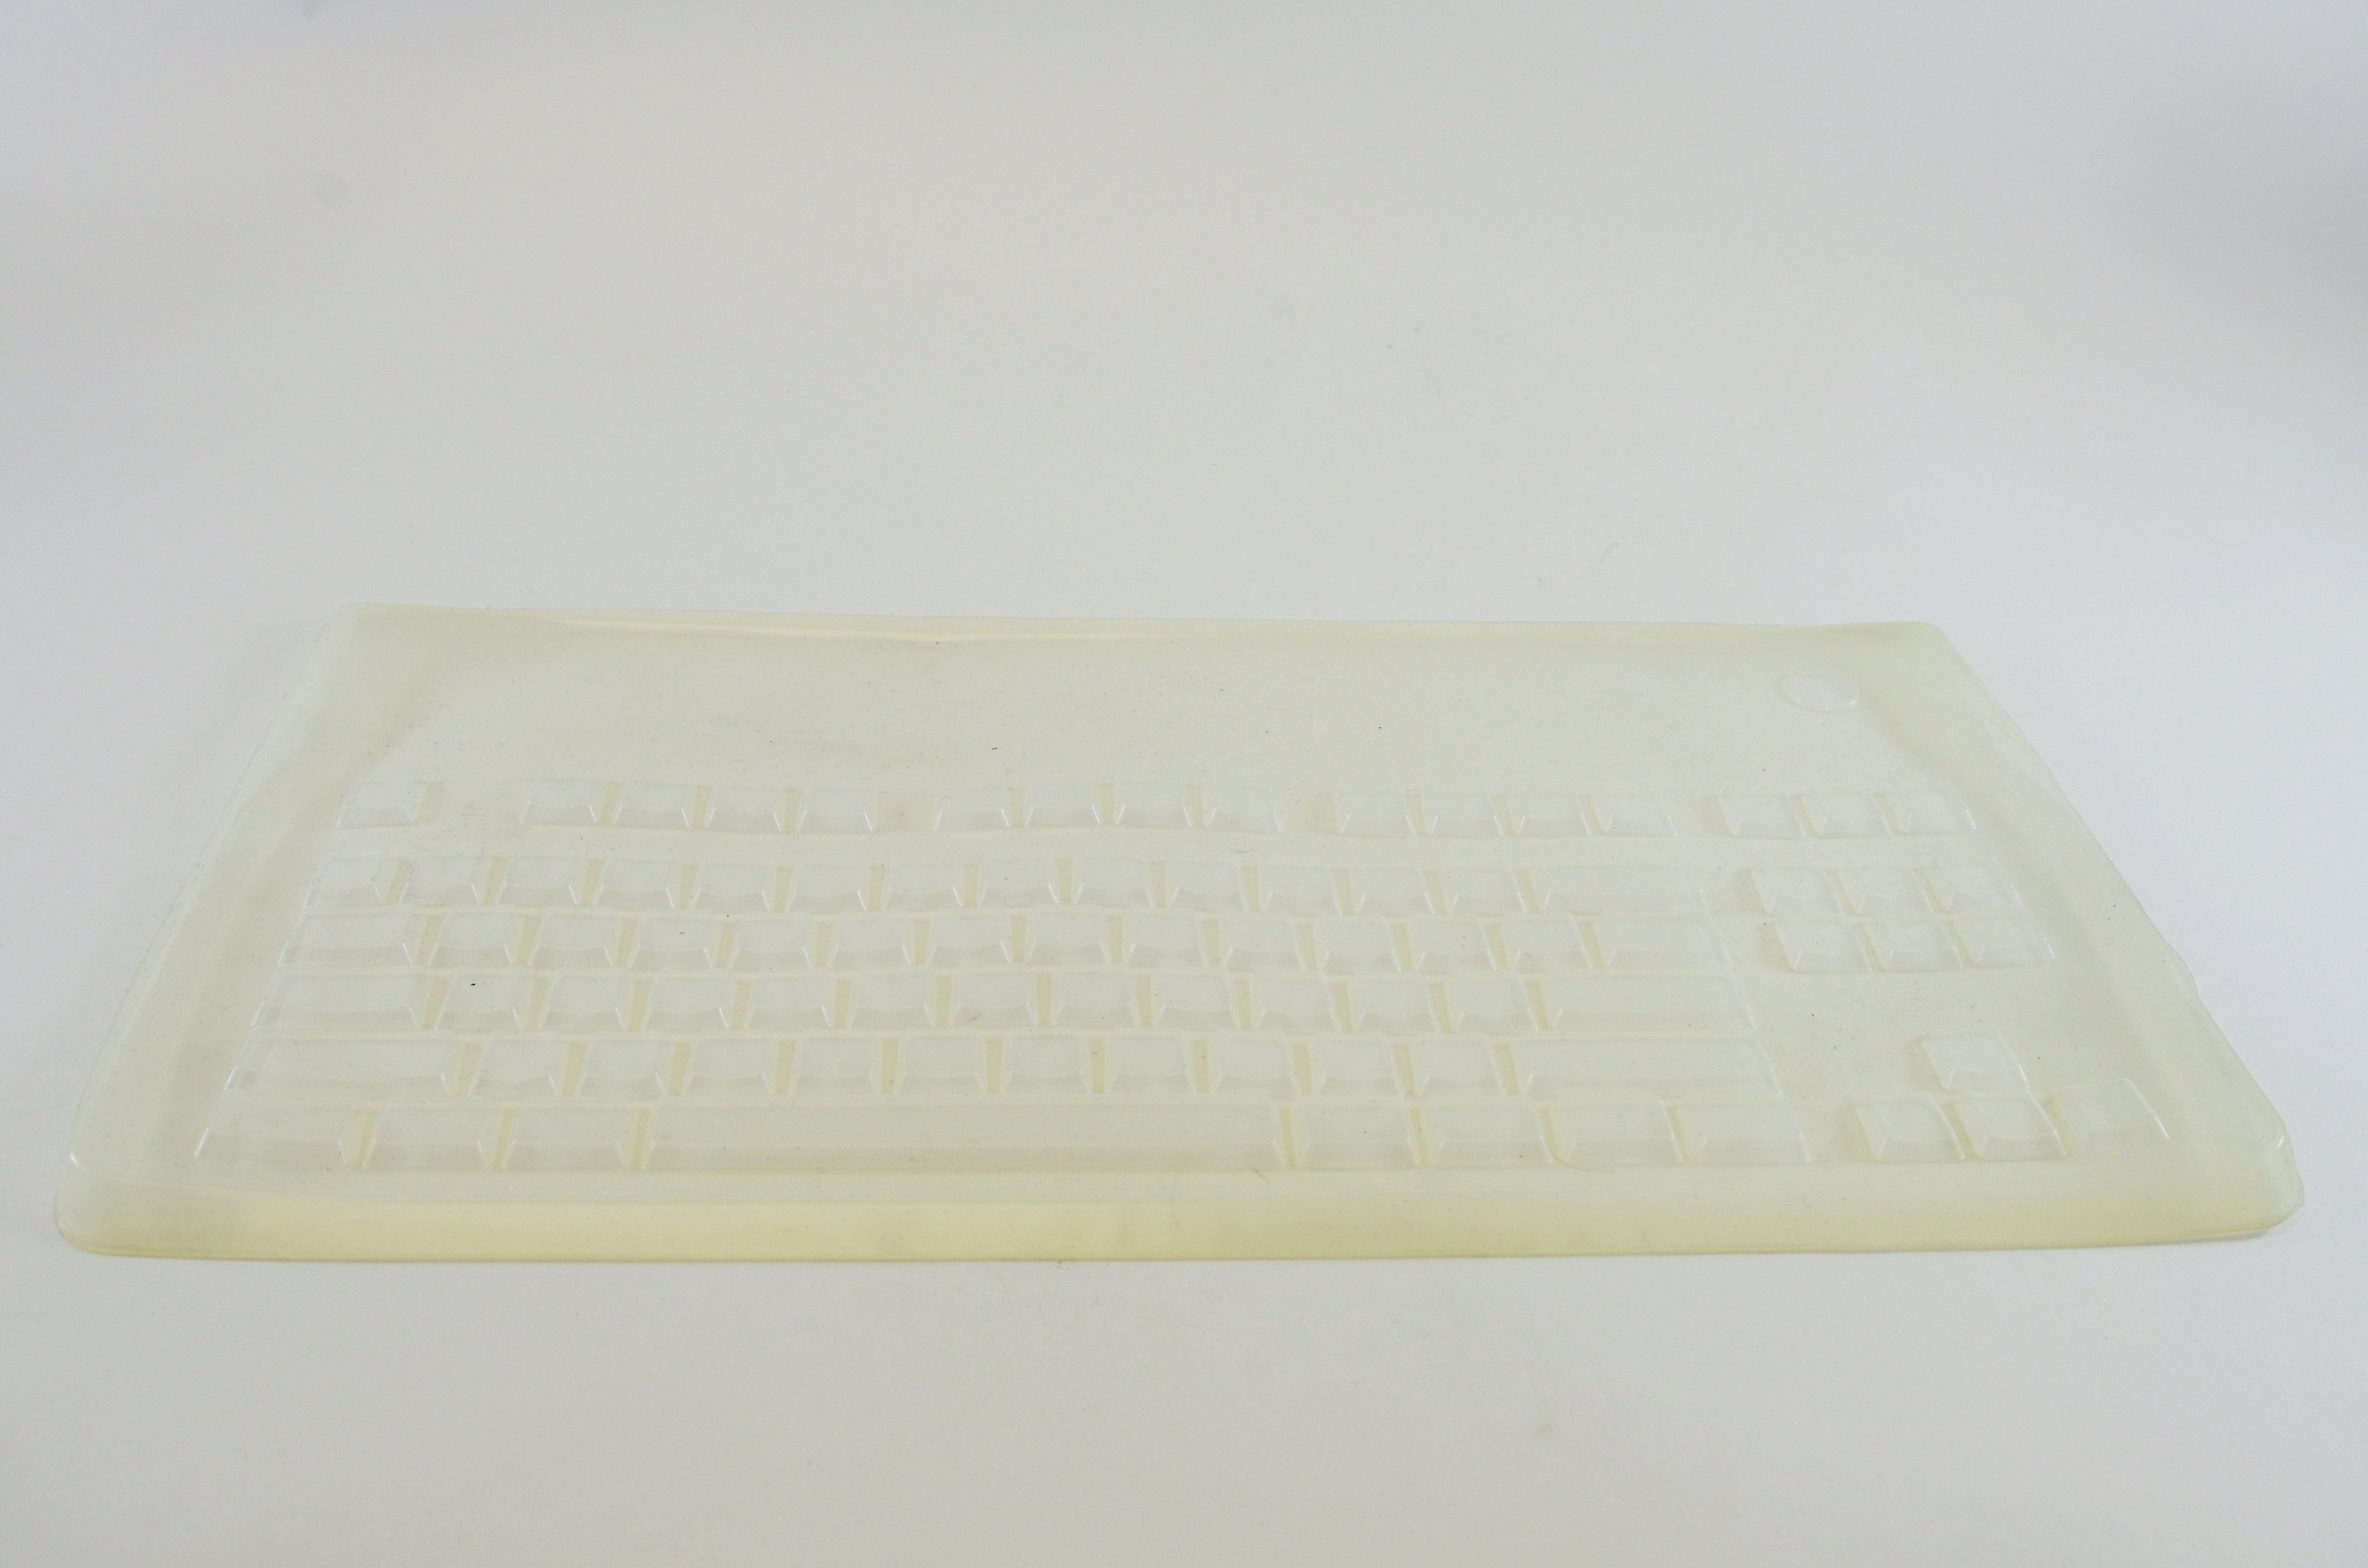 Olympus Keyboard Cover - For MAJ-1428 Keyboard (EVIS EXERA II 180 System)